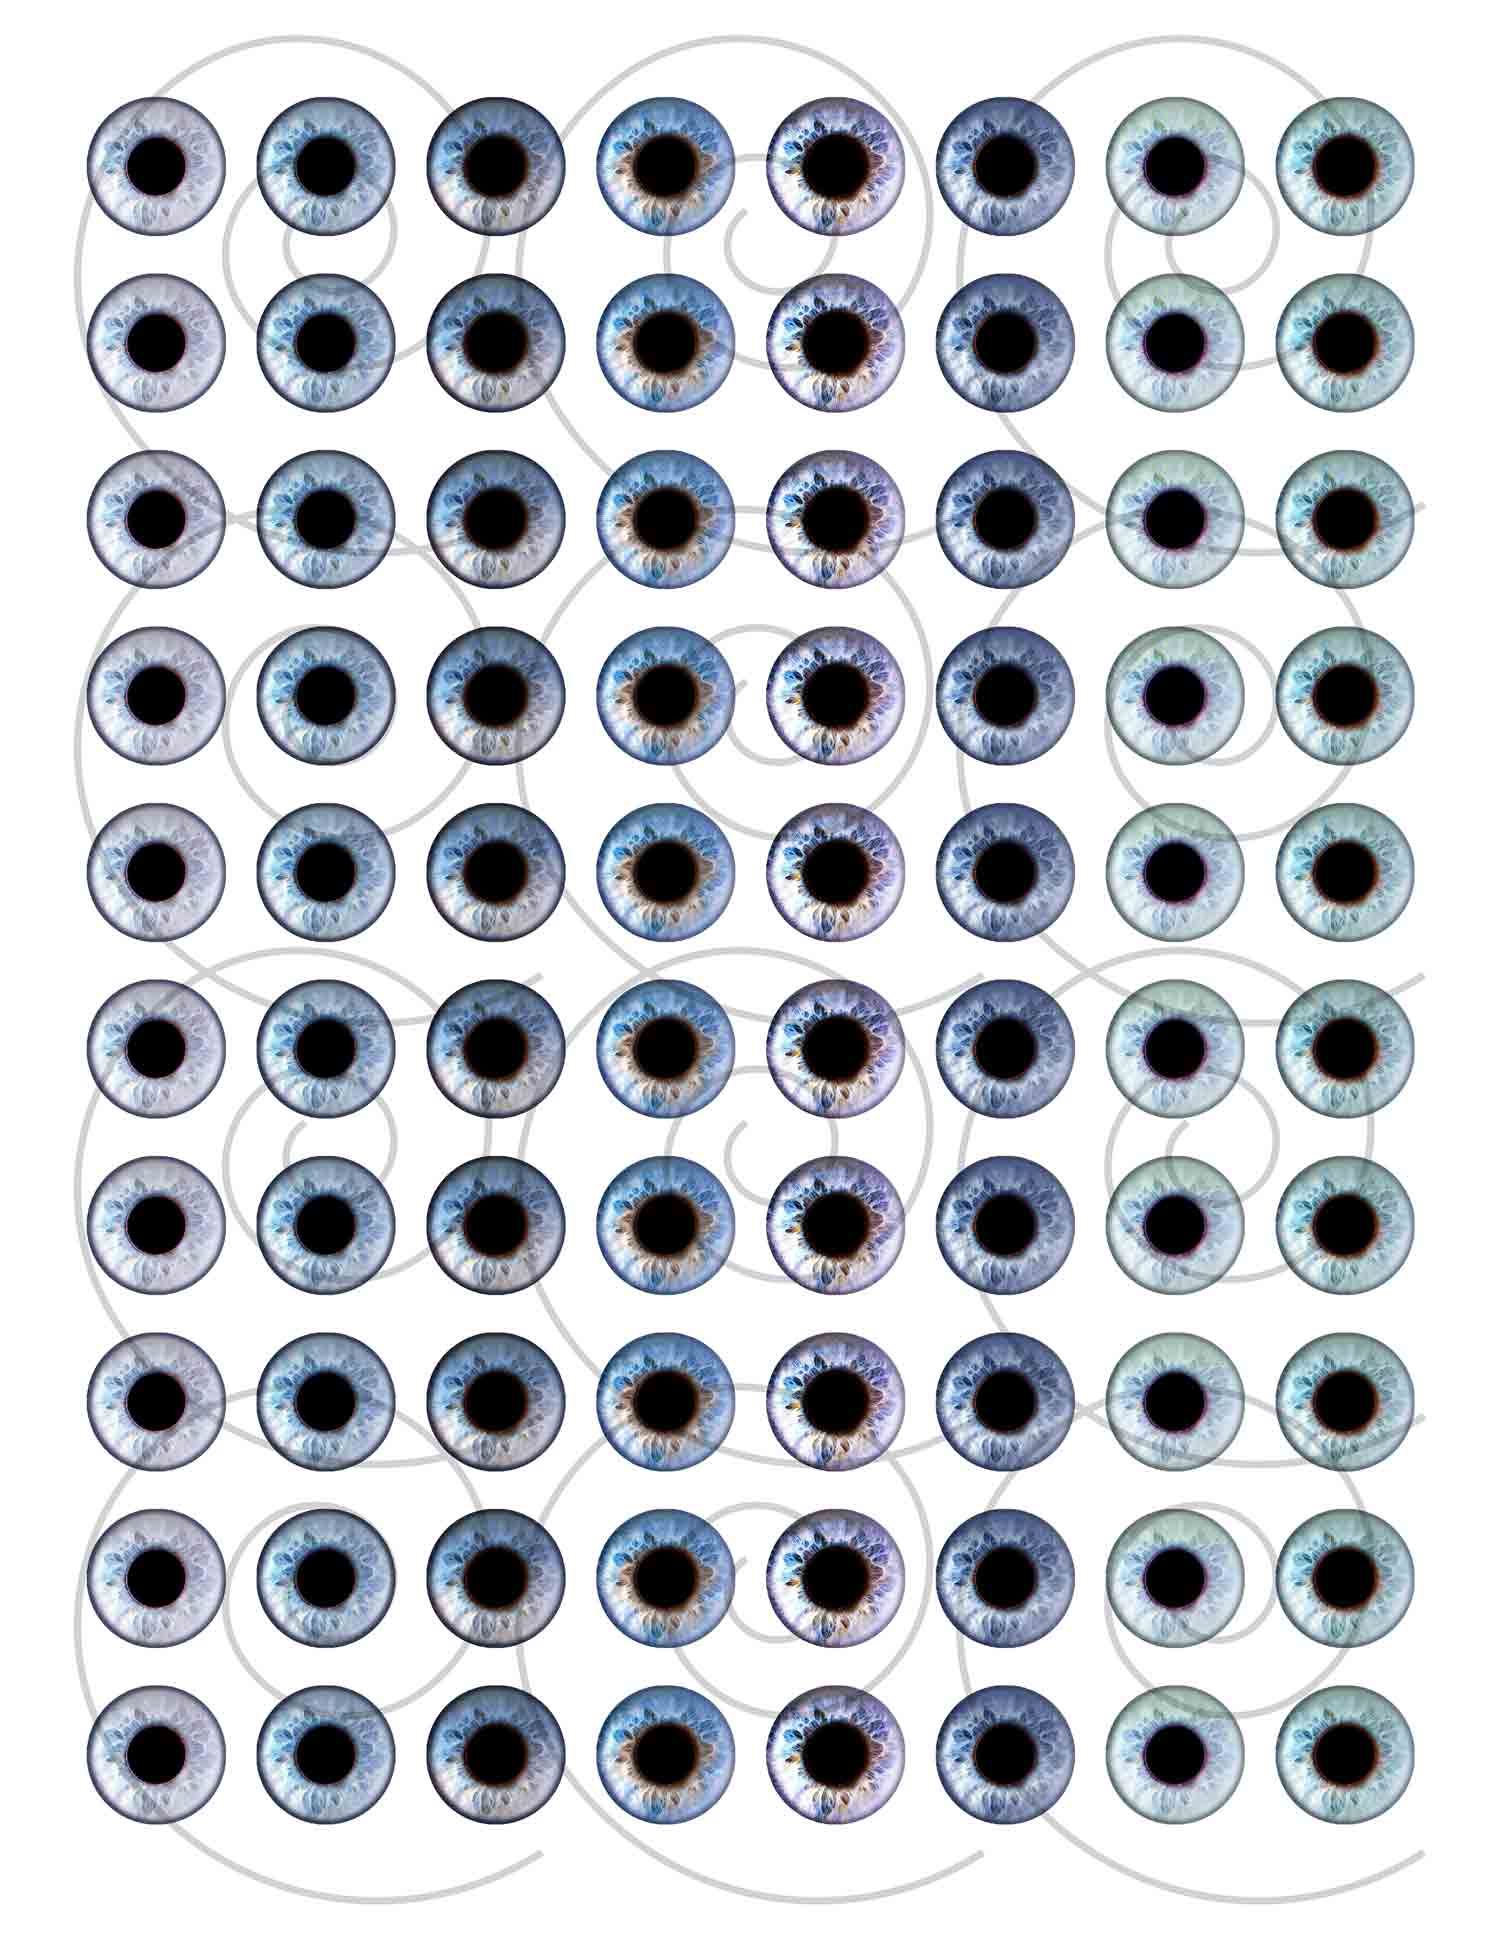 Light Blue Super Realistic Eyes Digital Collage Sheet - DailyDoll Shop